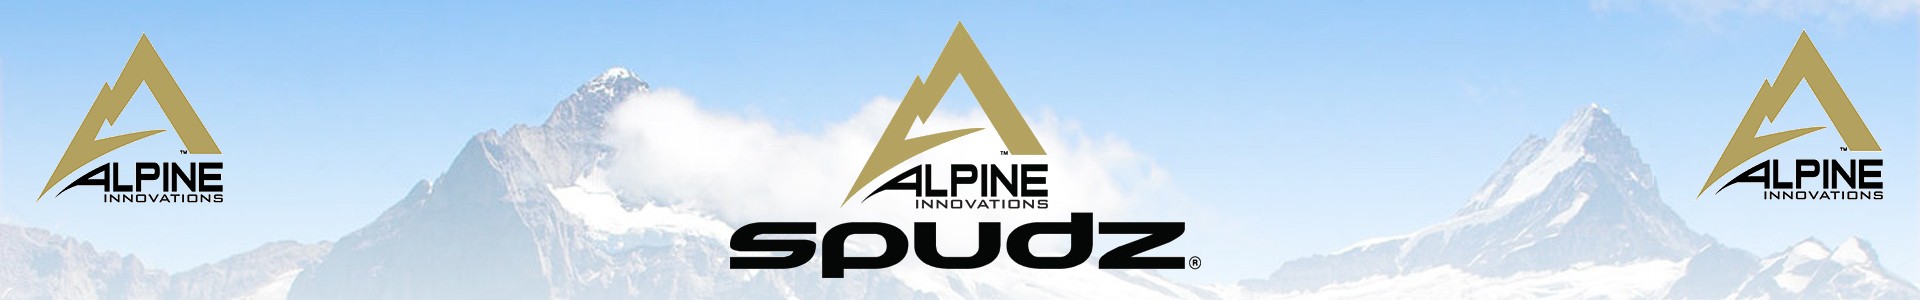 Alpine Innovations from Newpro UK Ltd